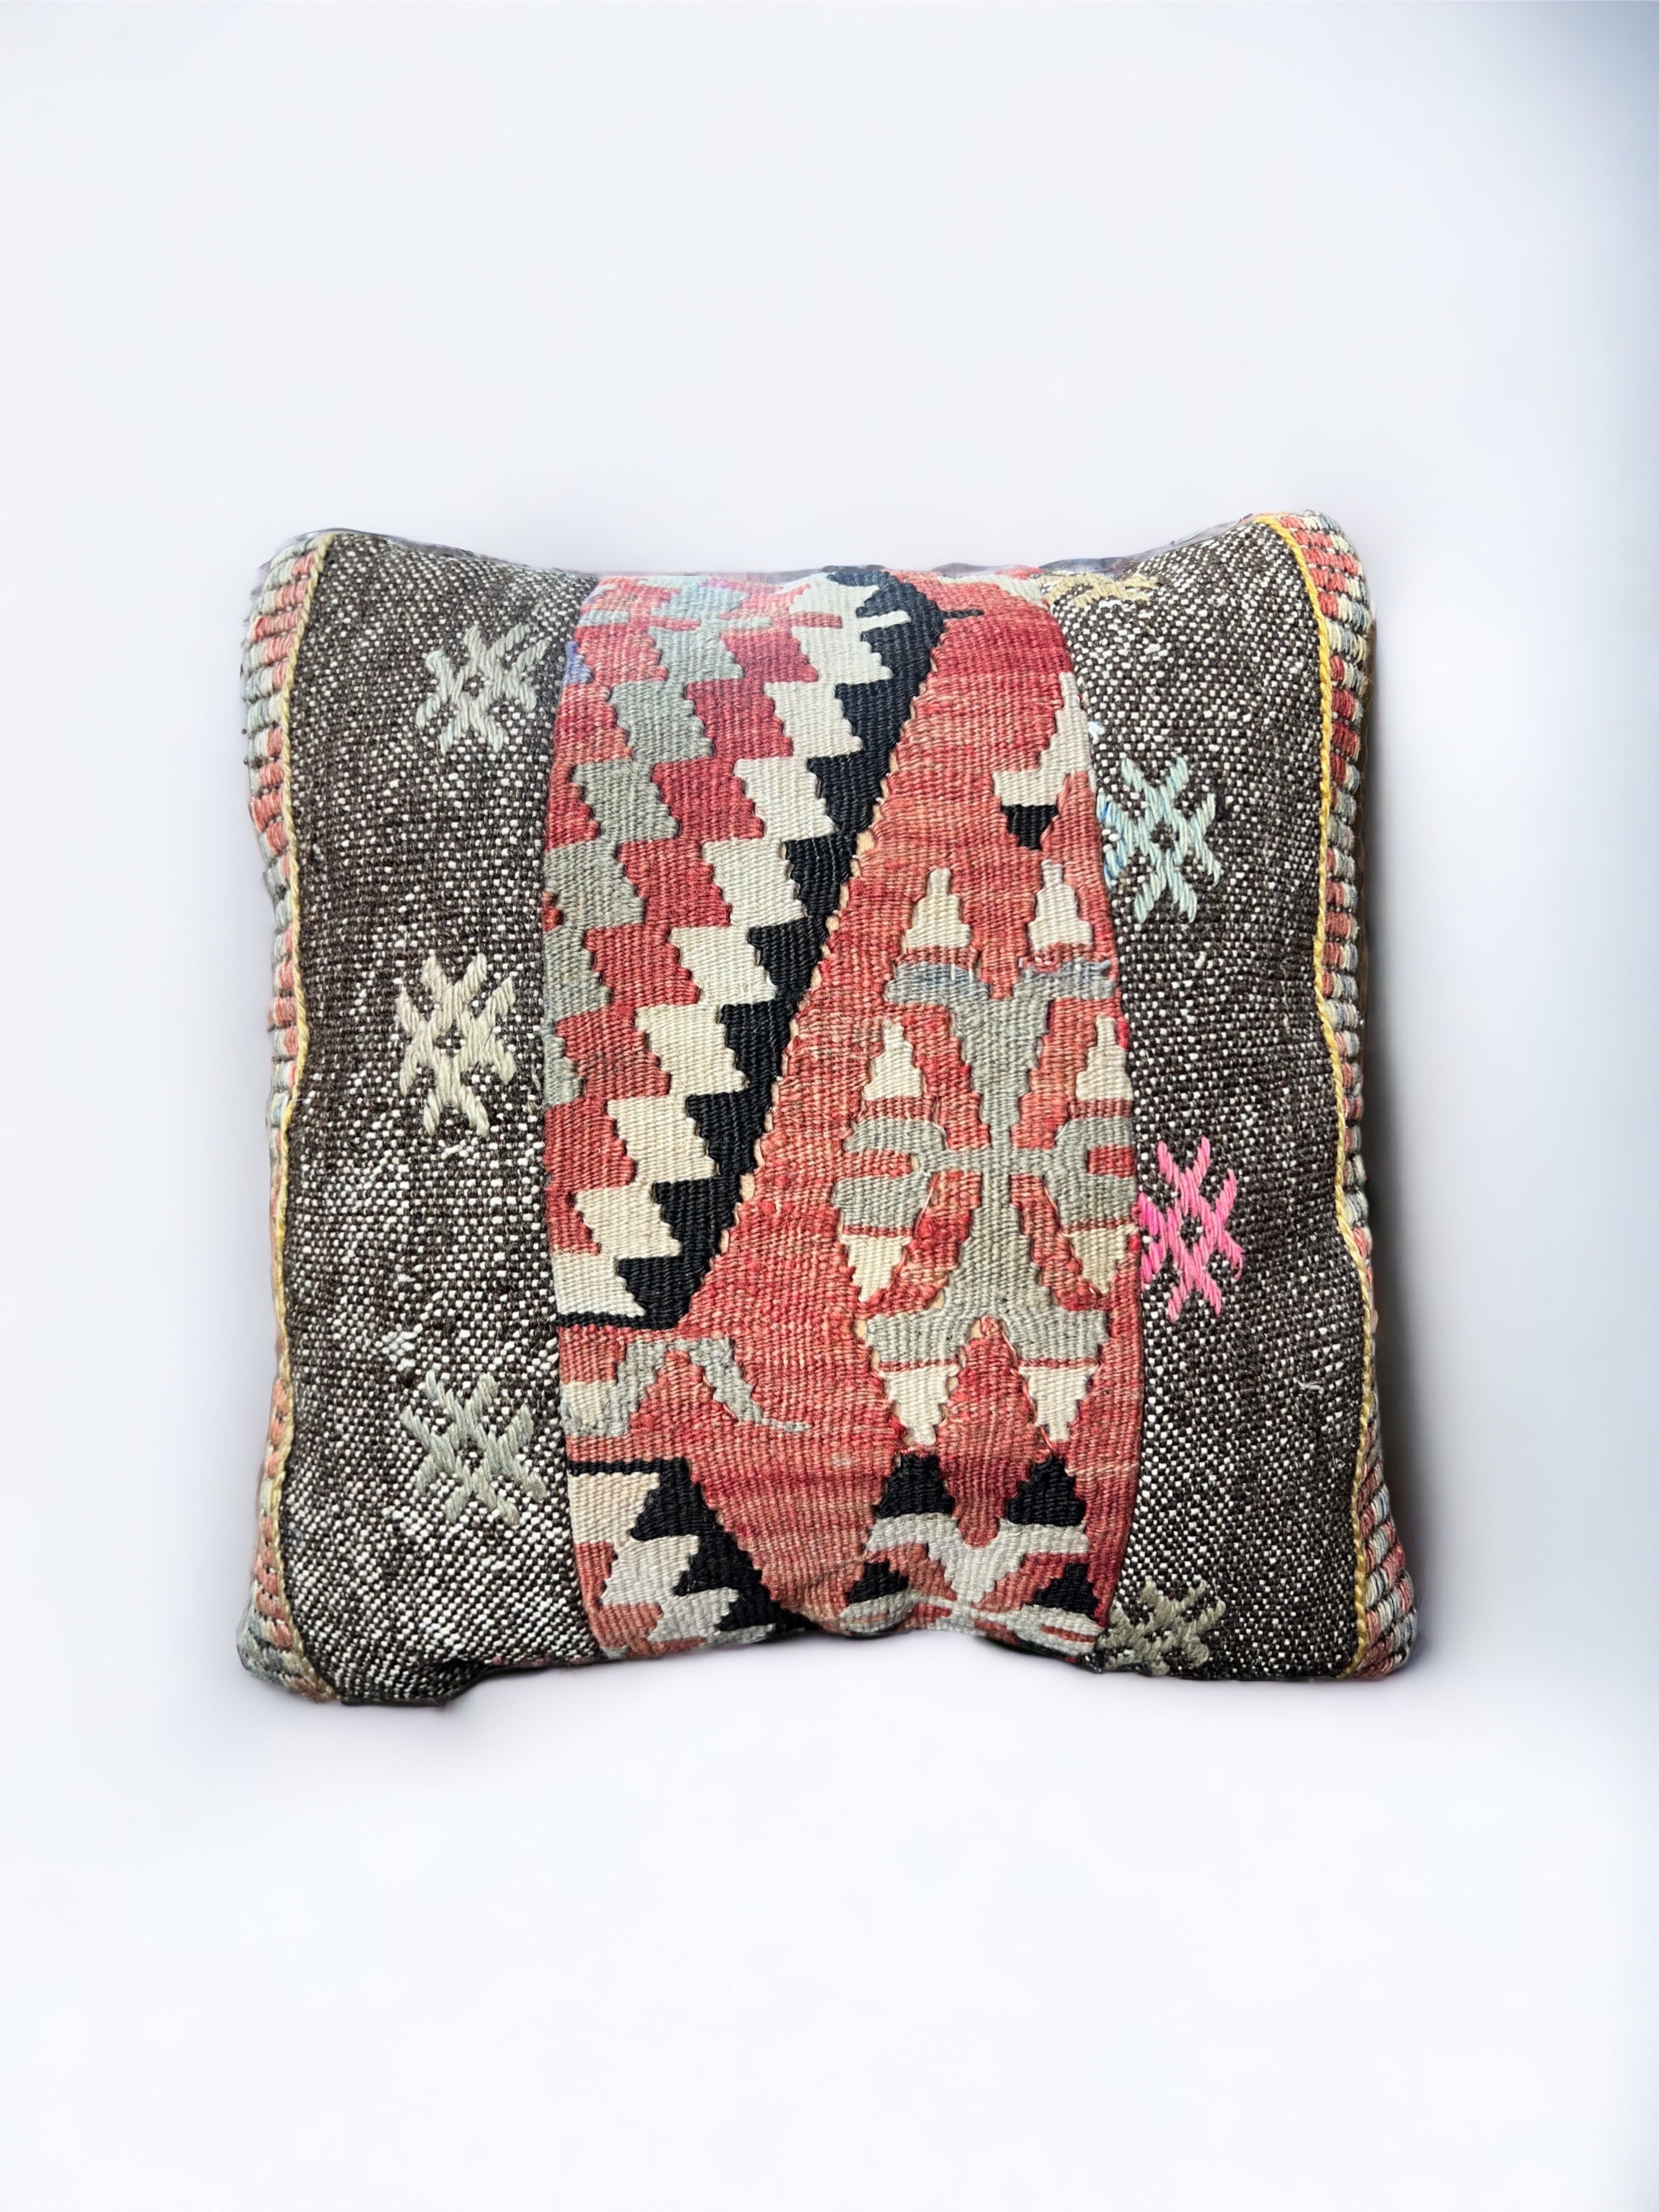 Southwestern Kilim Vintage Pillow